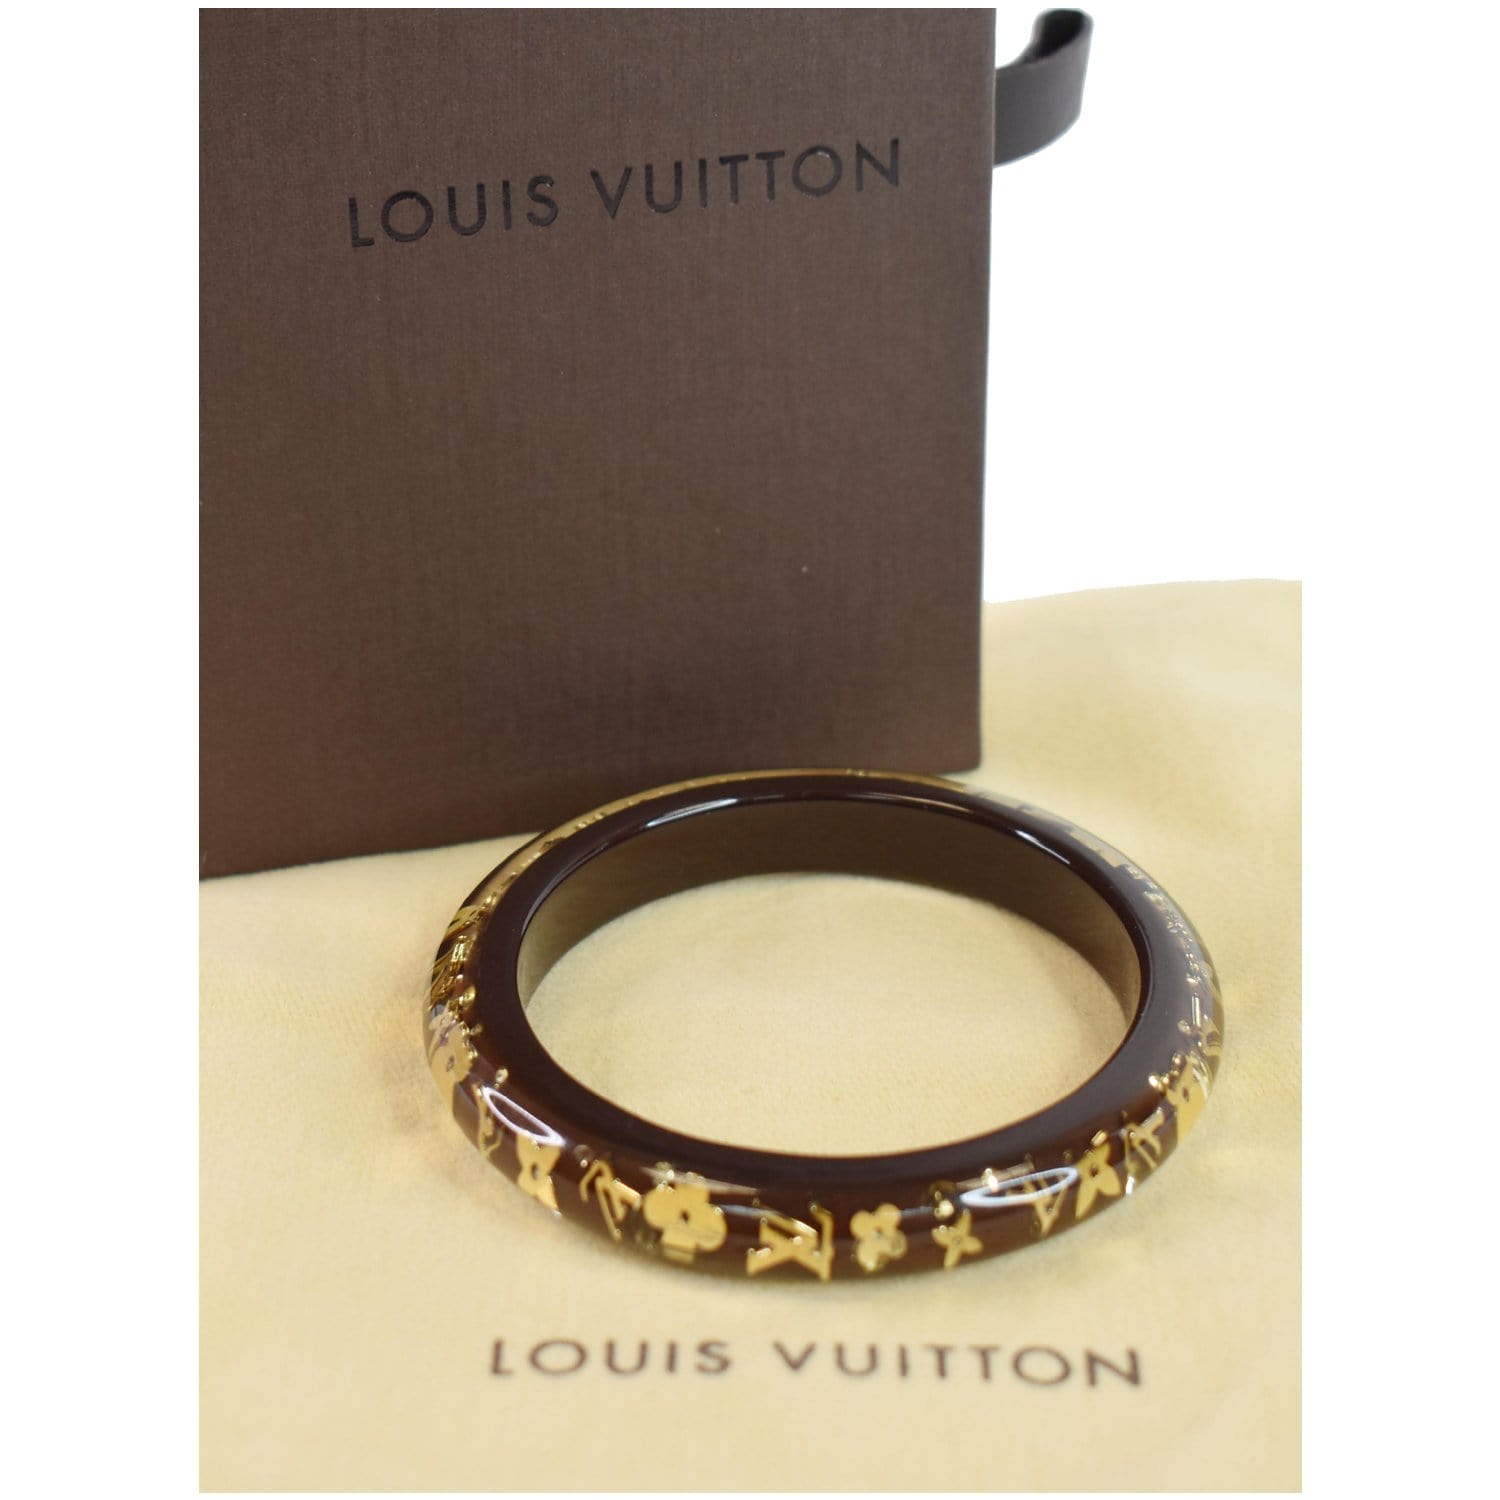 Louis Vuitton - Authenticated Inclusion Bracelet - Plastic Burgundy for Women, Very Good Condition